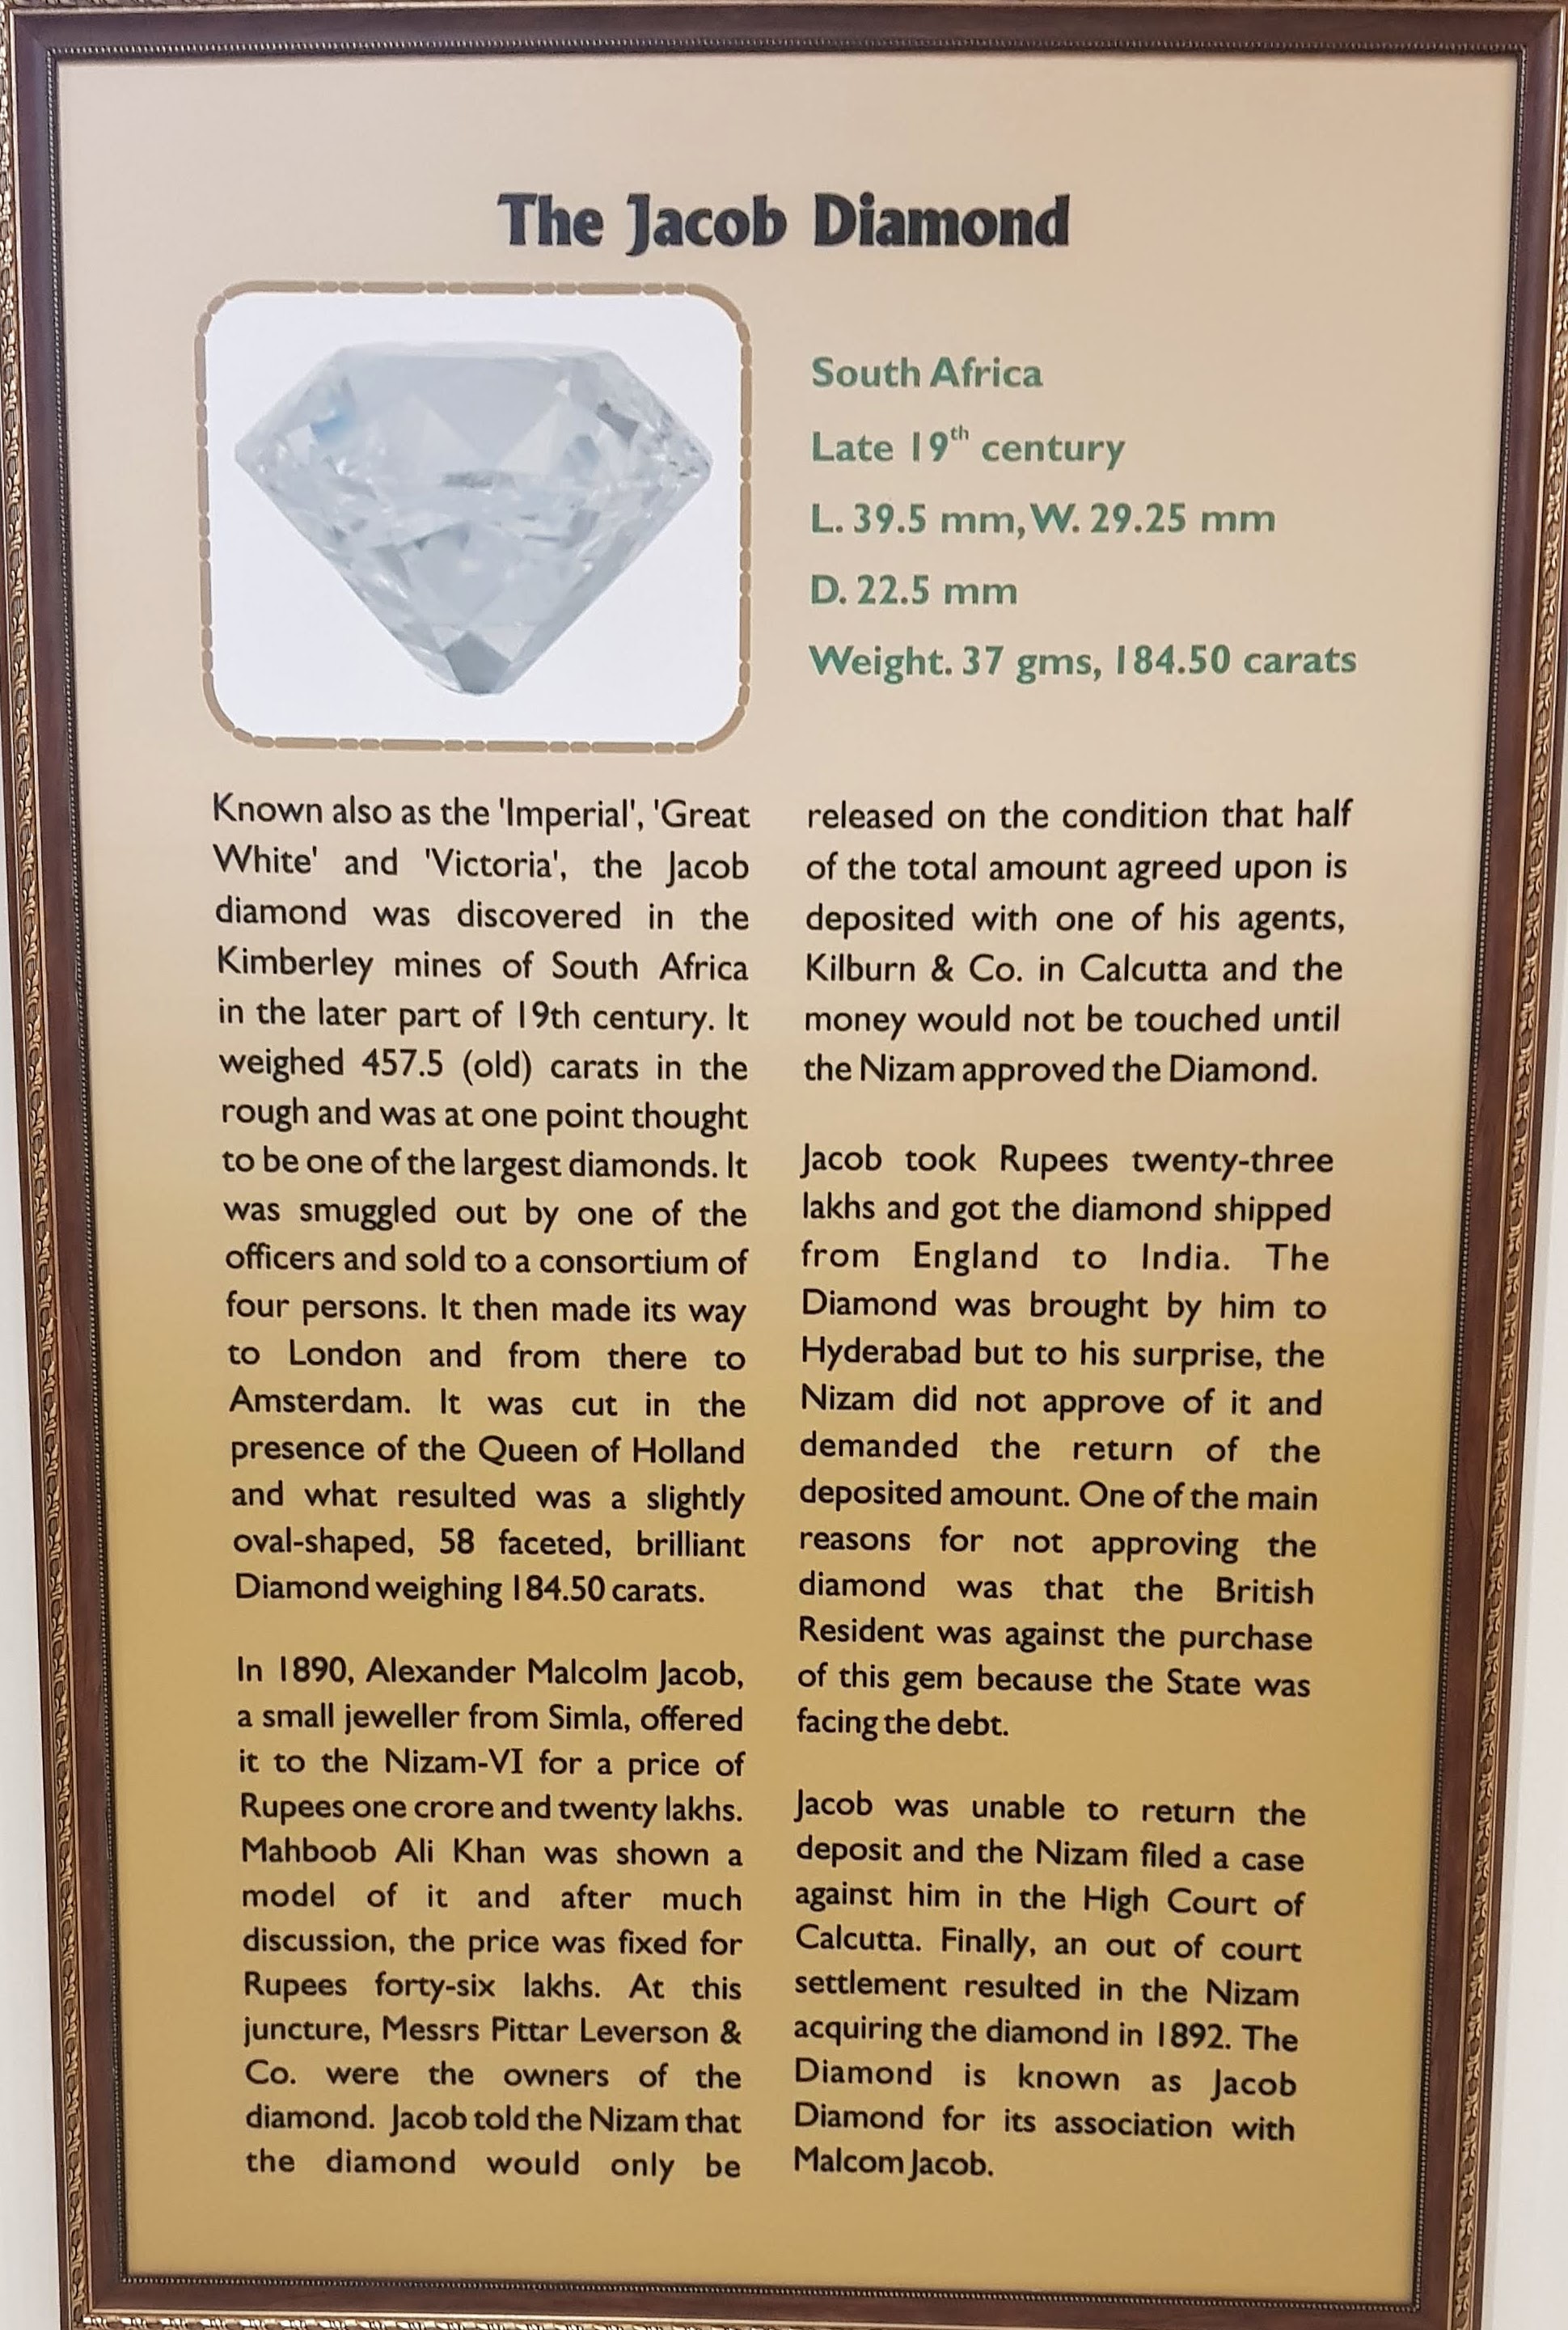 about jacob diamond